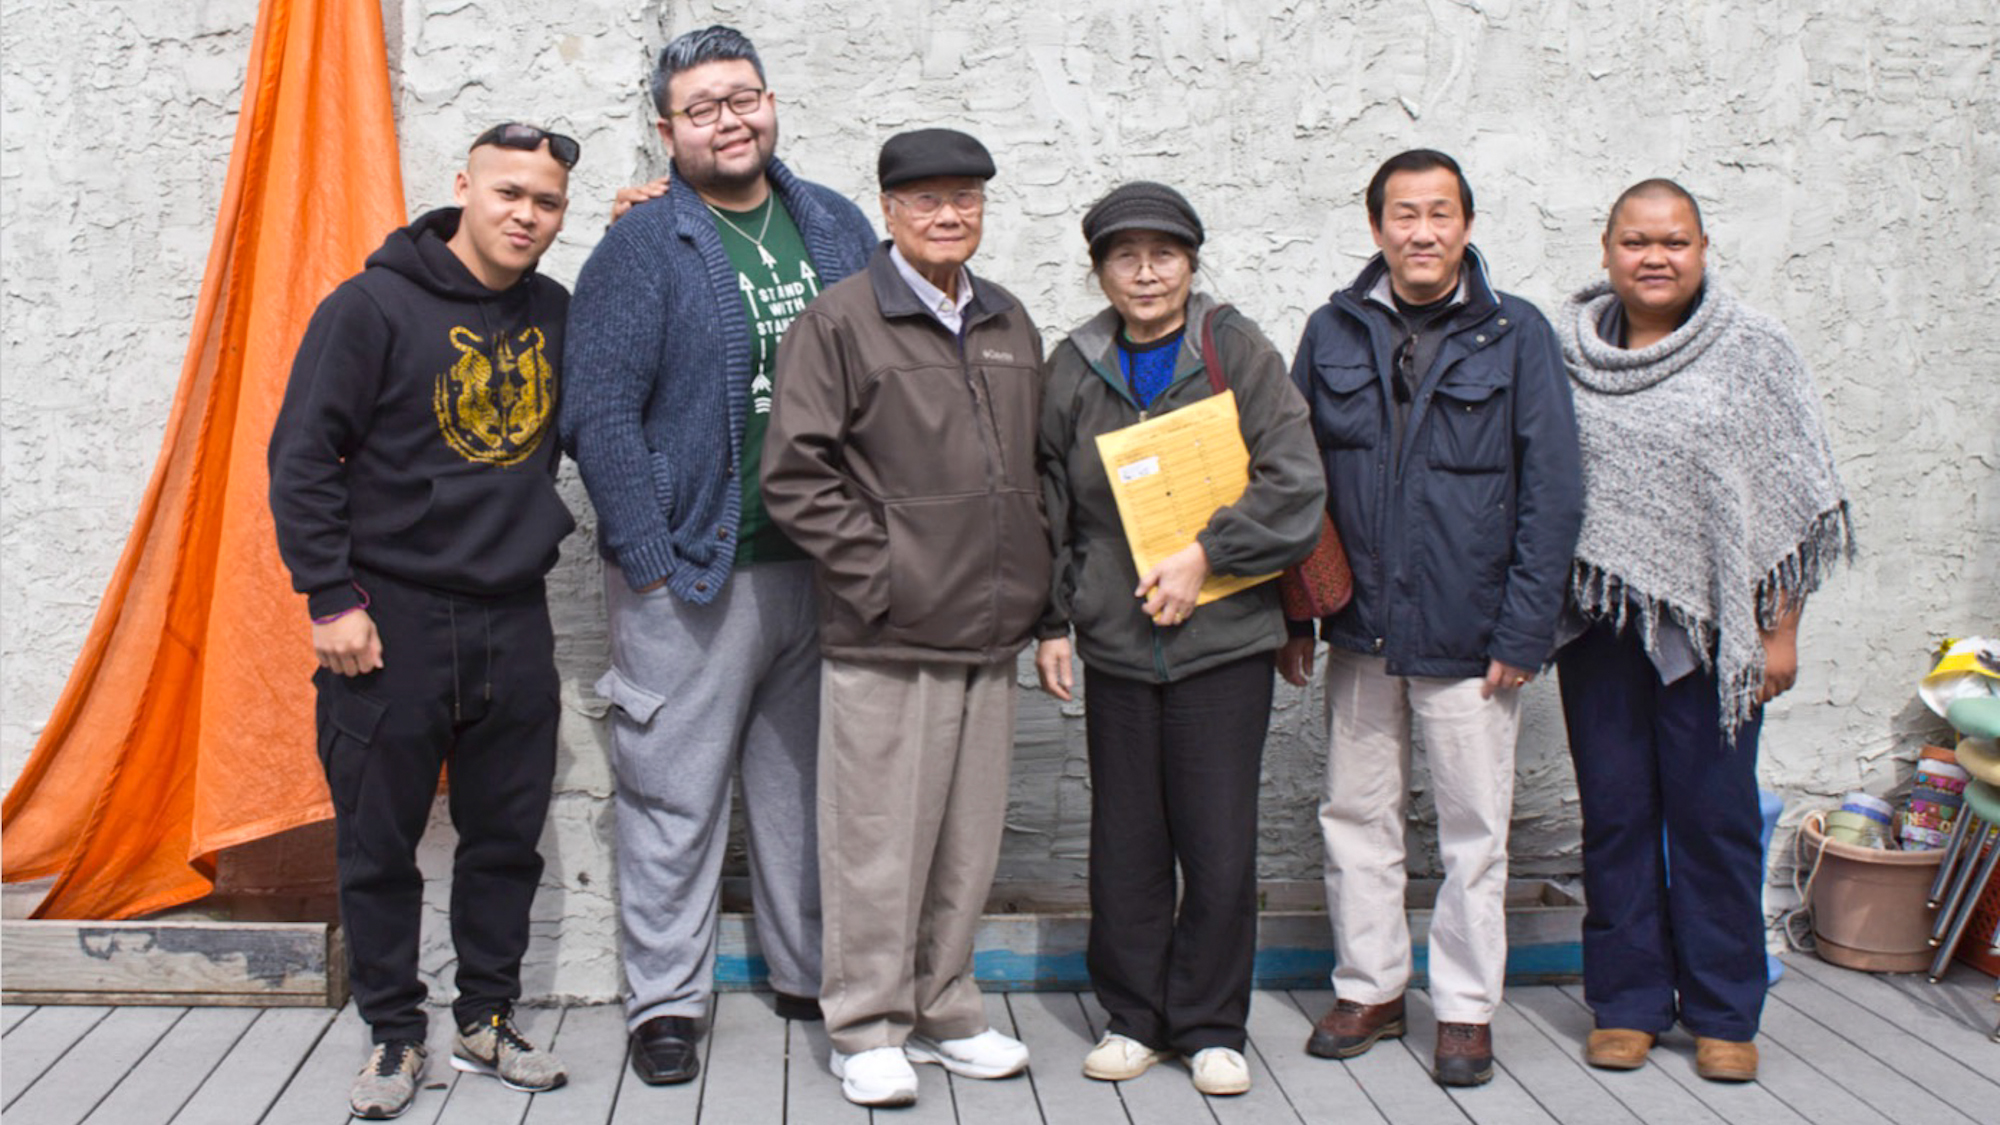 (From left) K. Natoen Chhin, Satun Chan, Kau Our, Kim Our, Hor Chou, and Sokmala Chy. (Kimberly Paynter/WHYY)